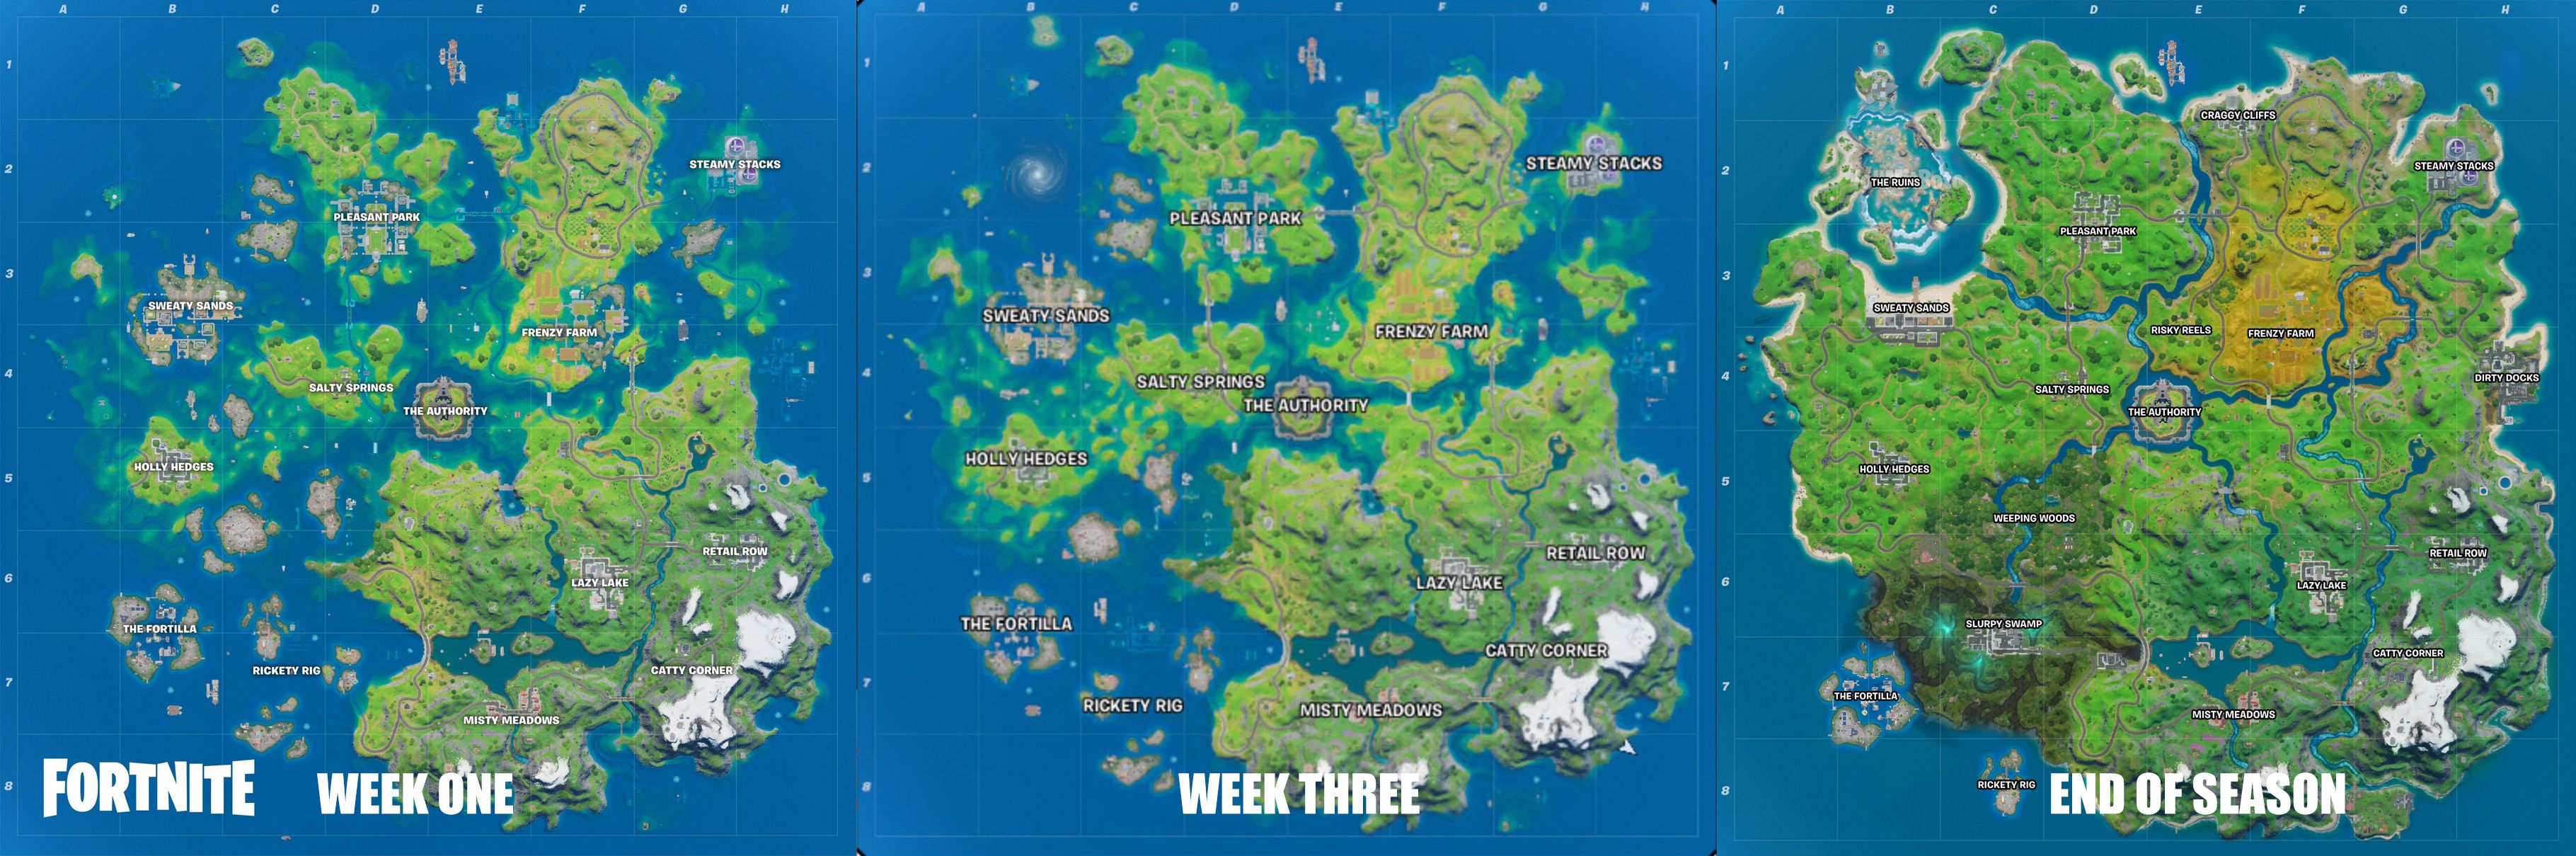 fortnite leaked map changes season 3 The Ruins